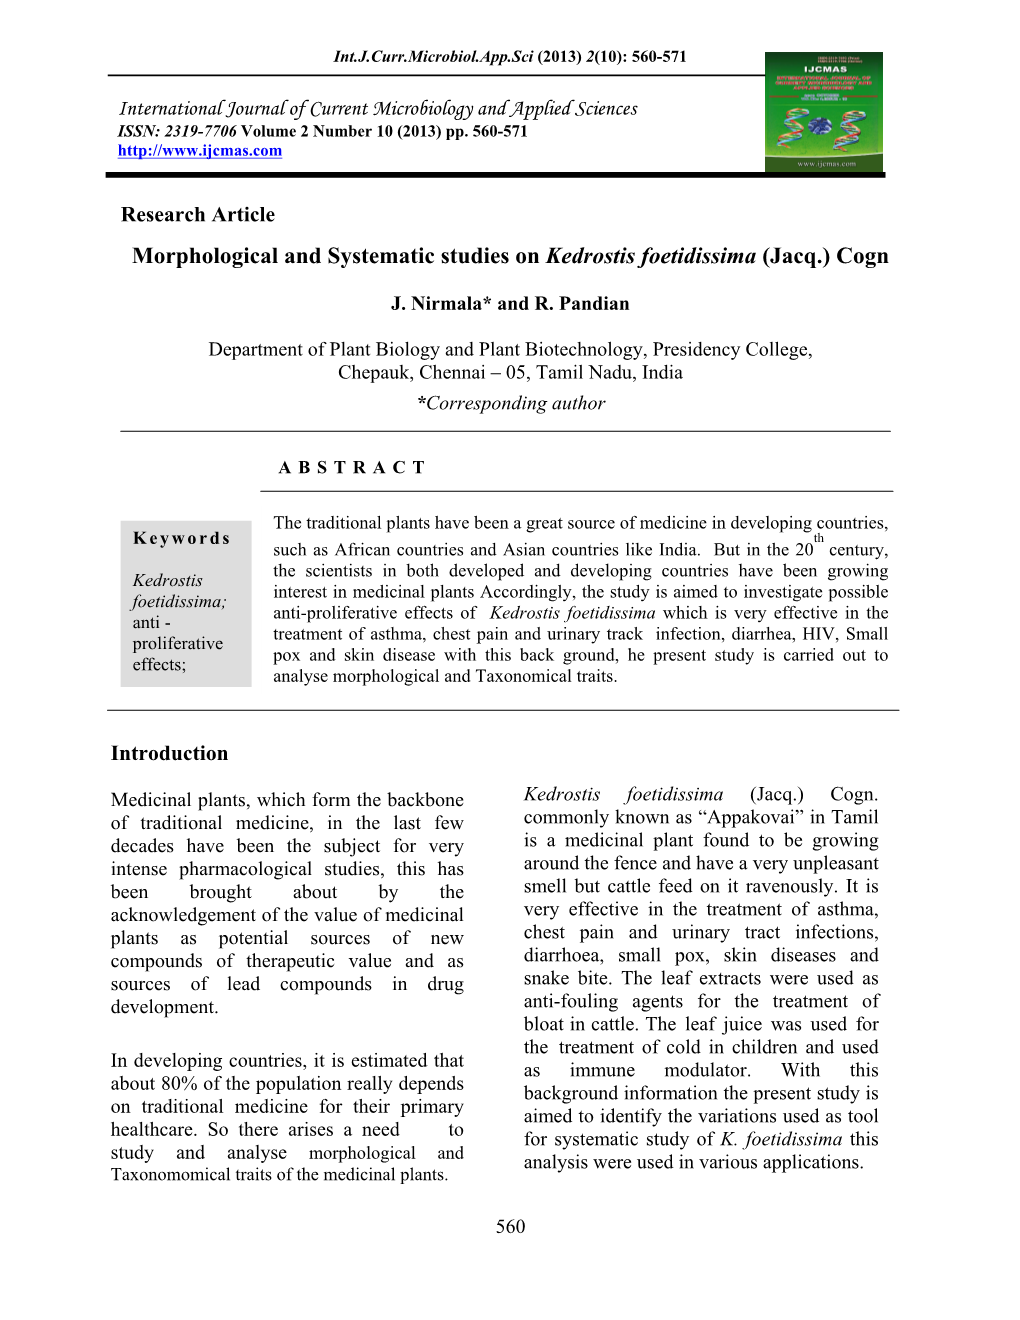 Morphological and Systematic Studies on Kedrostis Foetidissima (Jacq.) Cogn